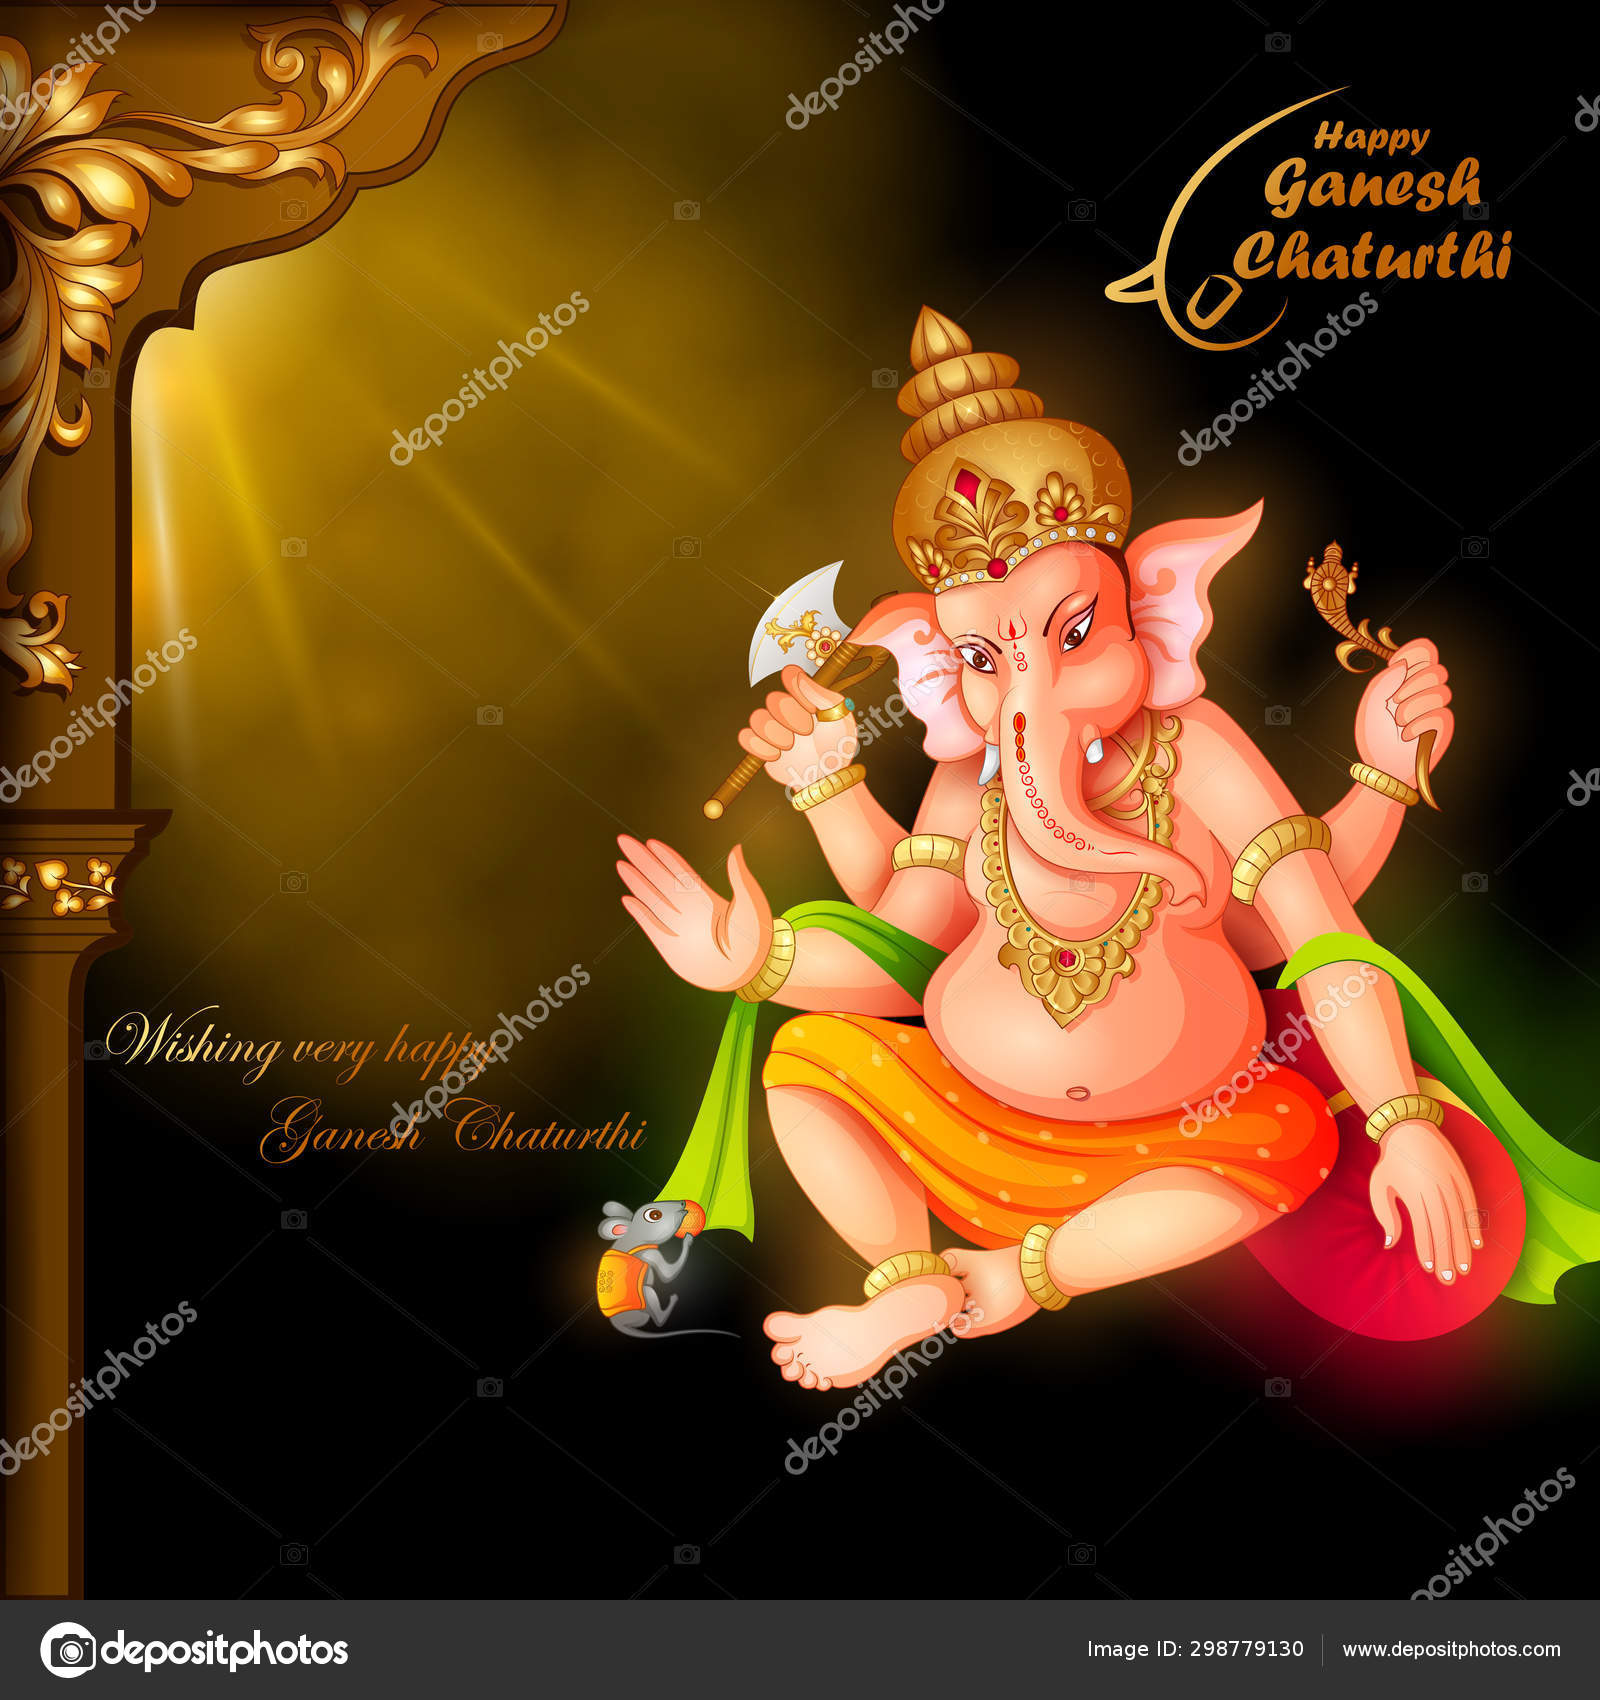 6075 Ganesh Banner Images Stock Photos  Vectors  Shutterstock